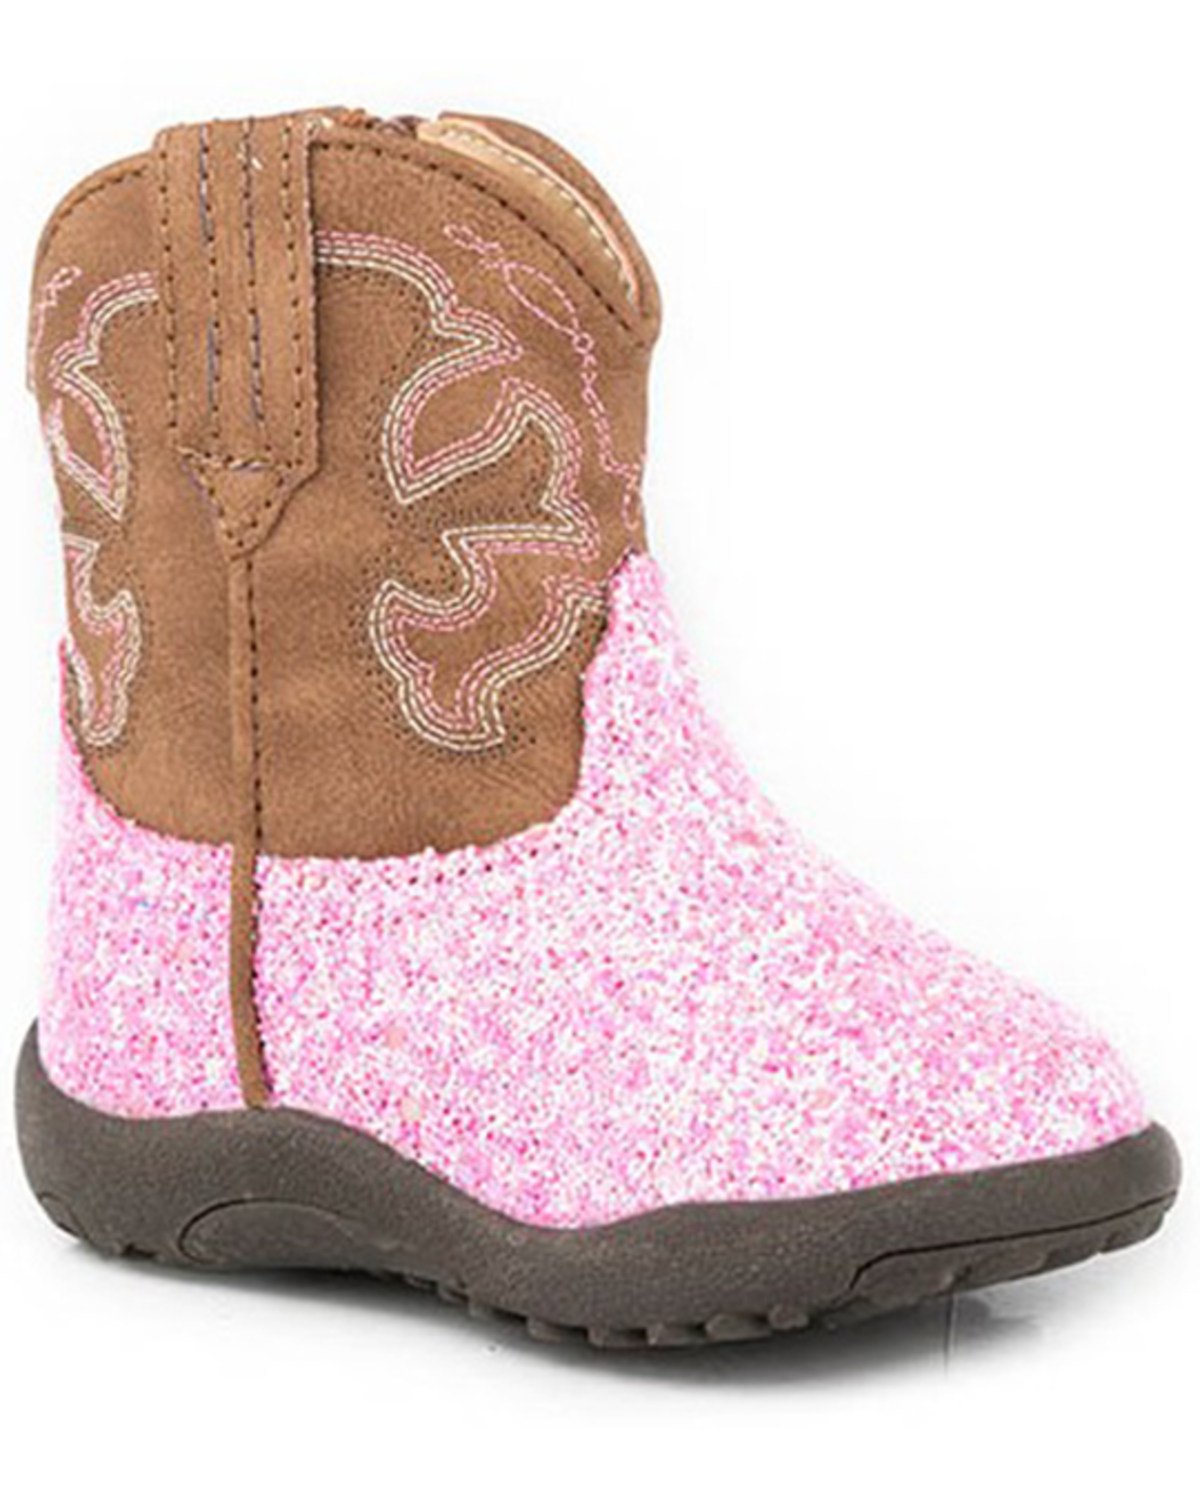 Roper Infant Girls' Glitter Sparkle Western Boots - Round Toe